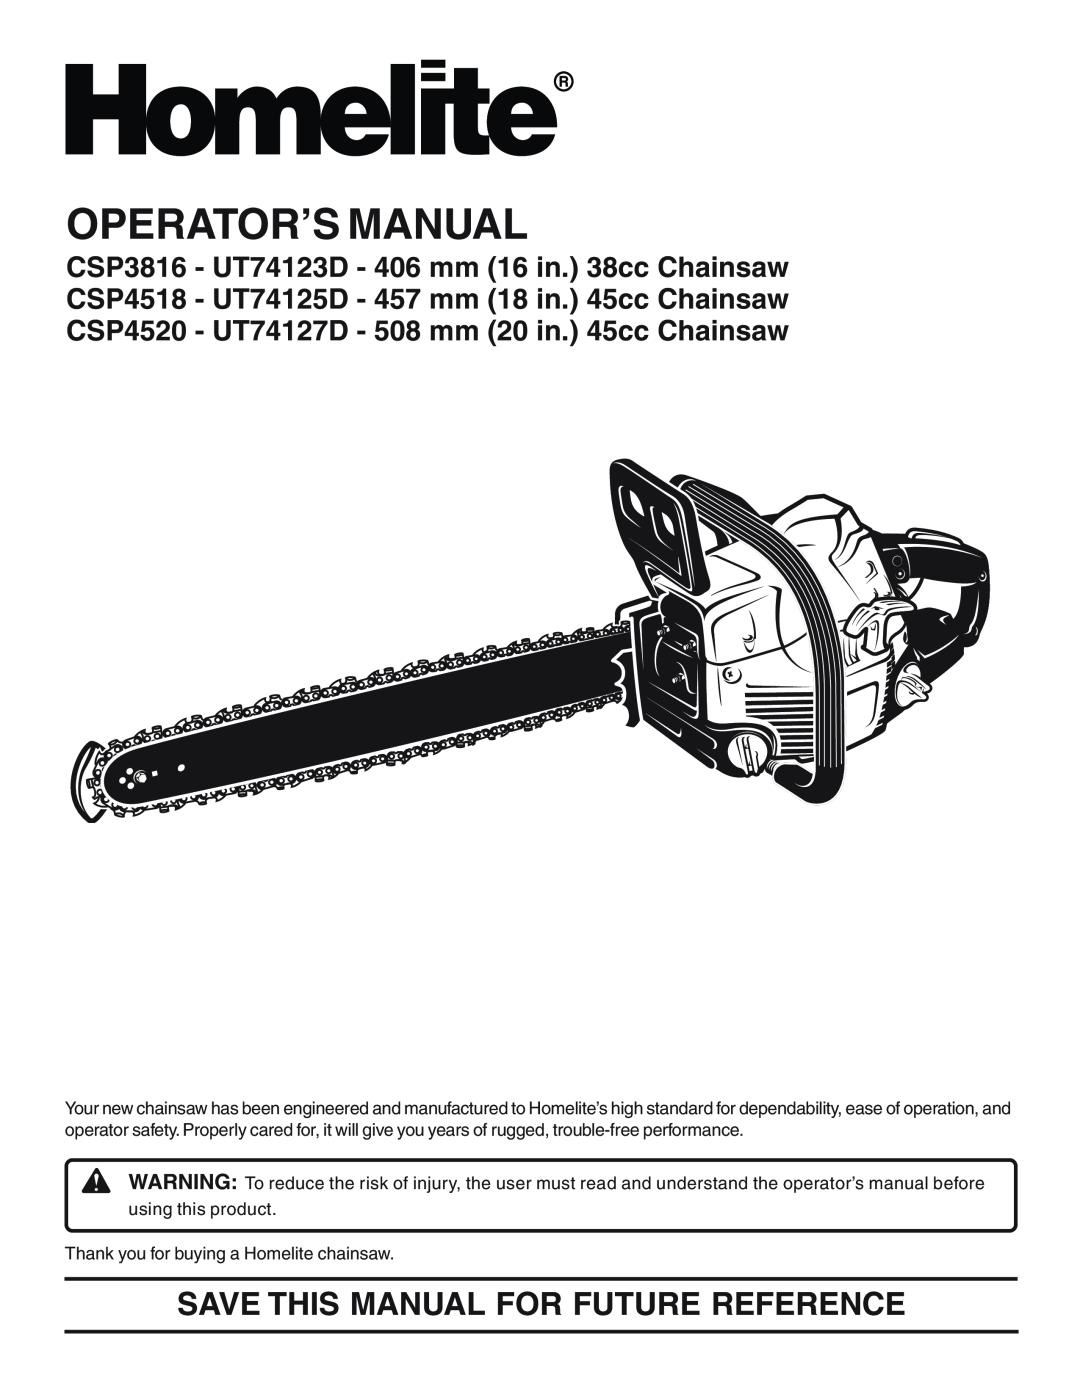 Homelite CSP4518 - UT74125D, CSP4520 - UT74127D manual Save This Manual For Future Reference, Operator’S Manual 